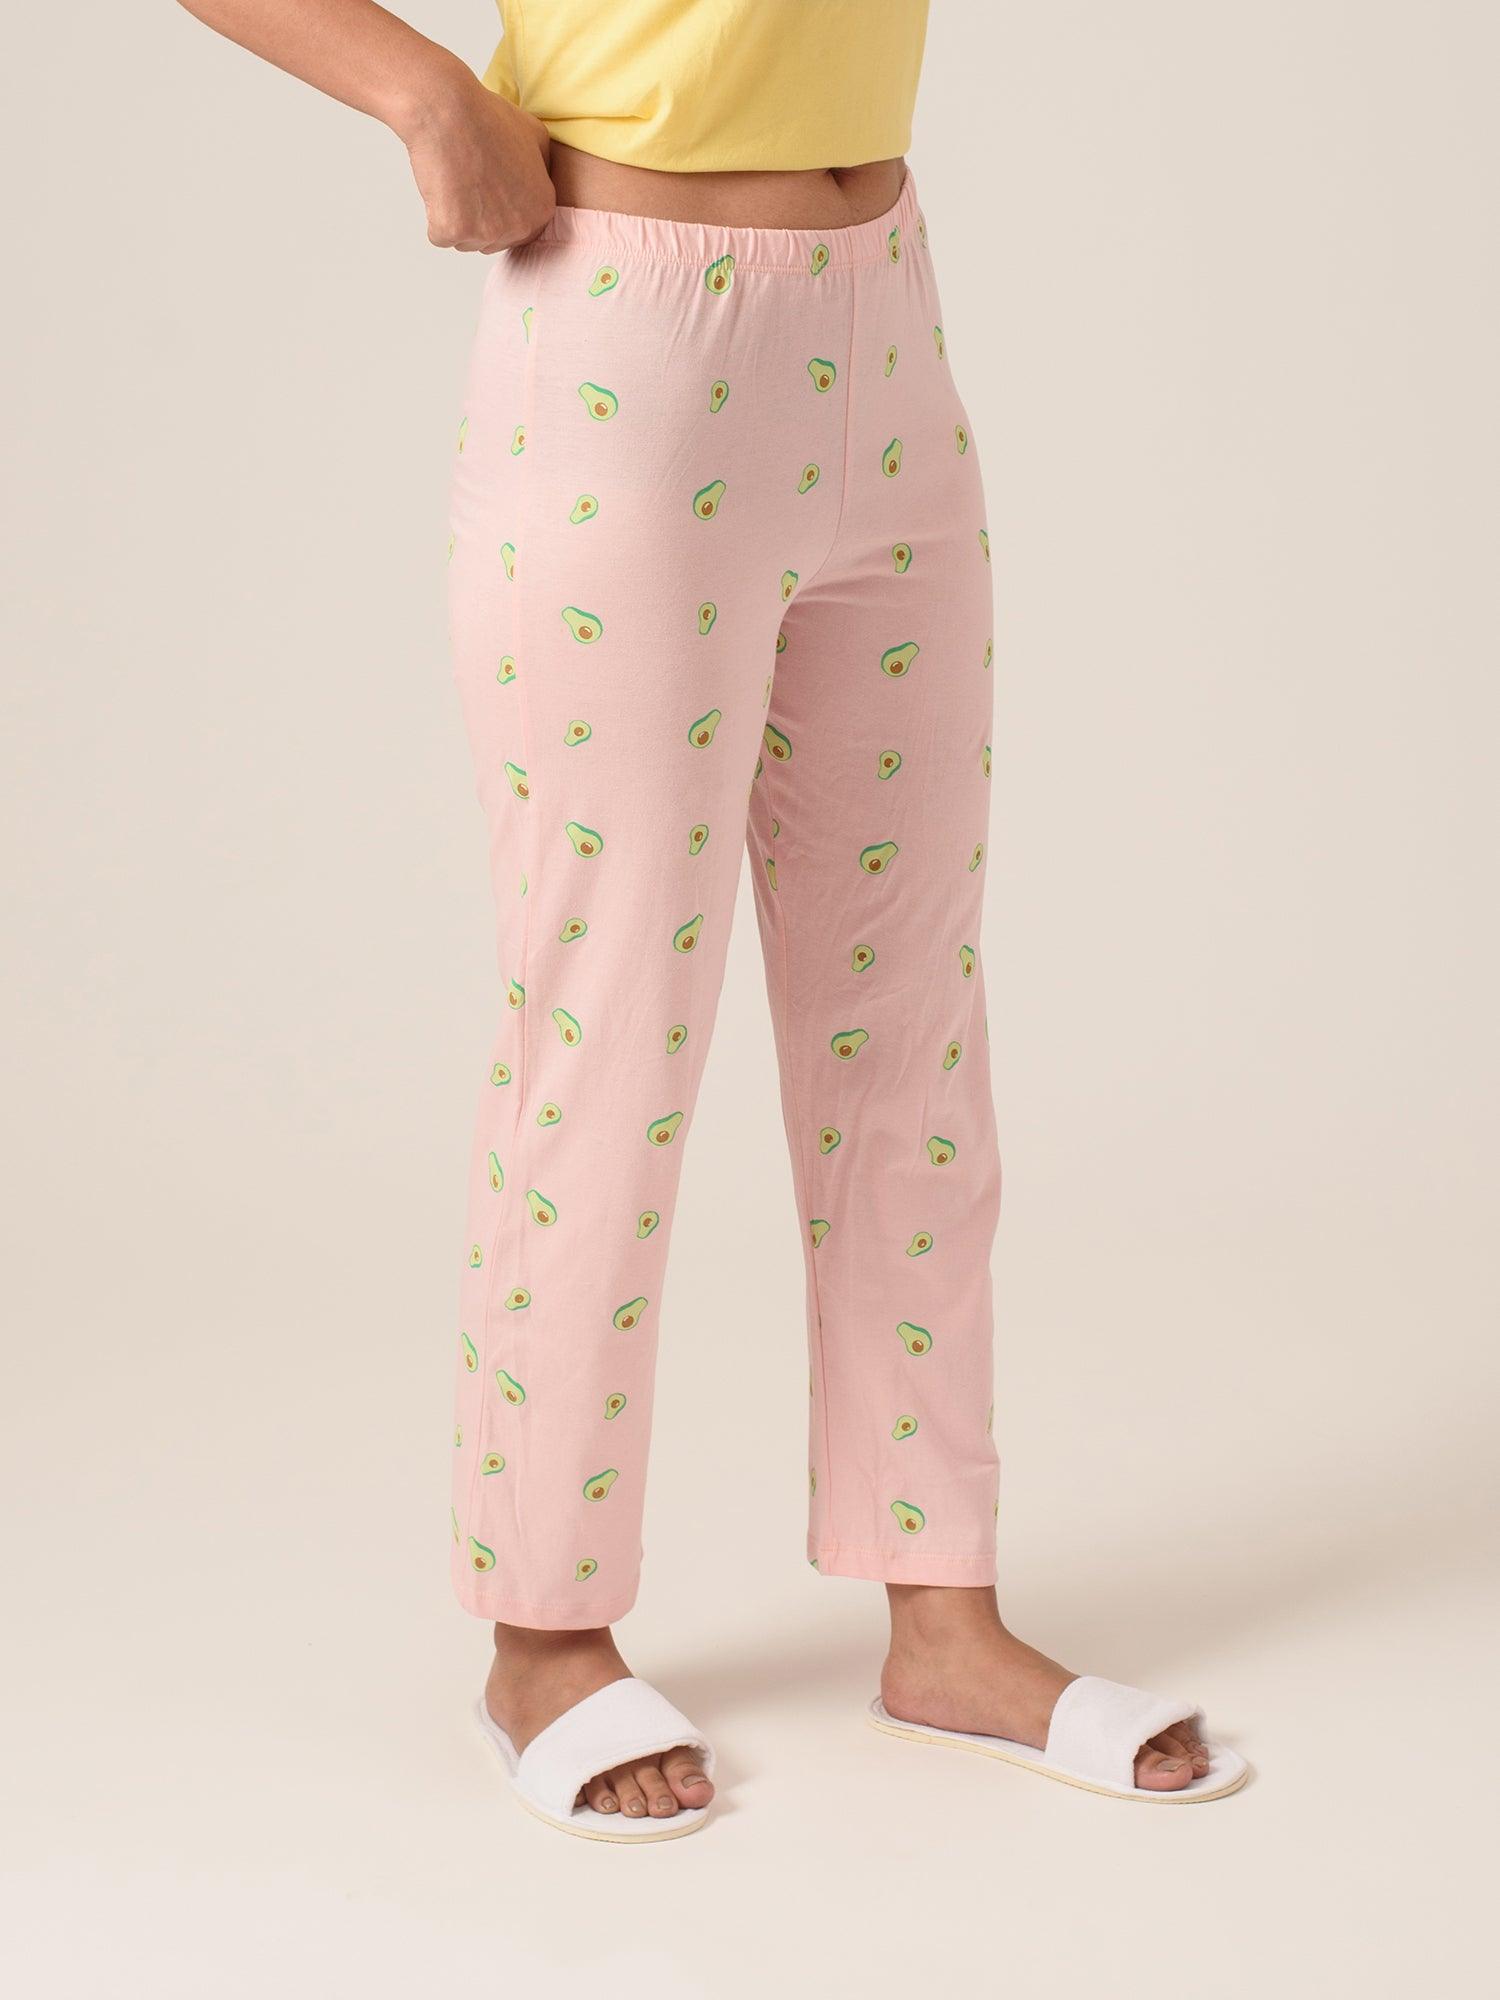 Let's Avocuddle Printed Cotton Pyjamas - soxytoes